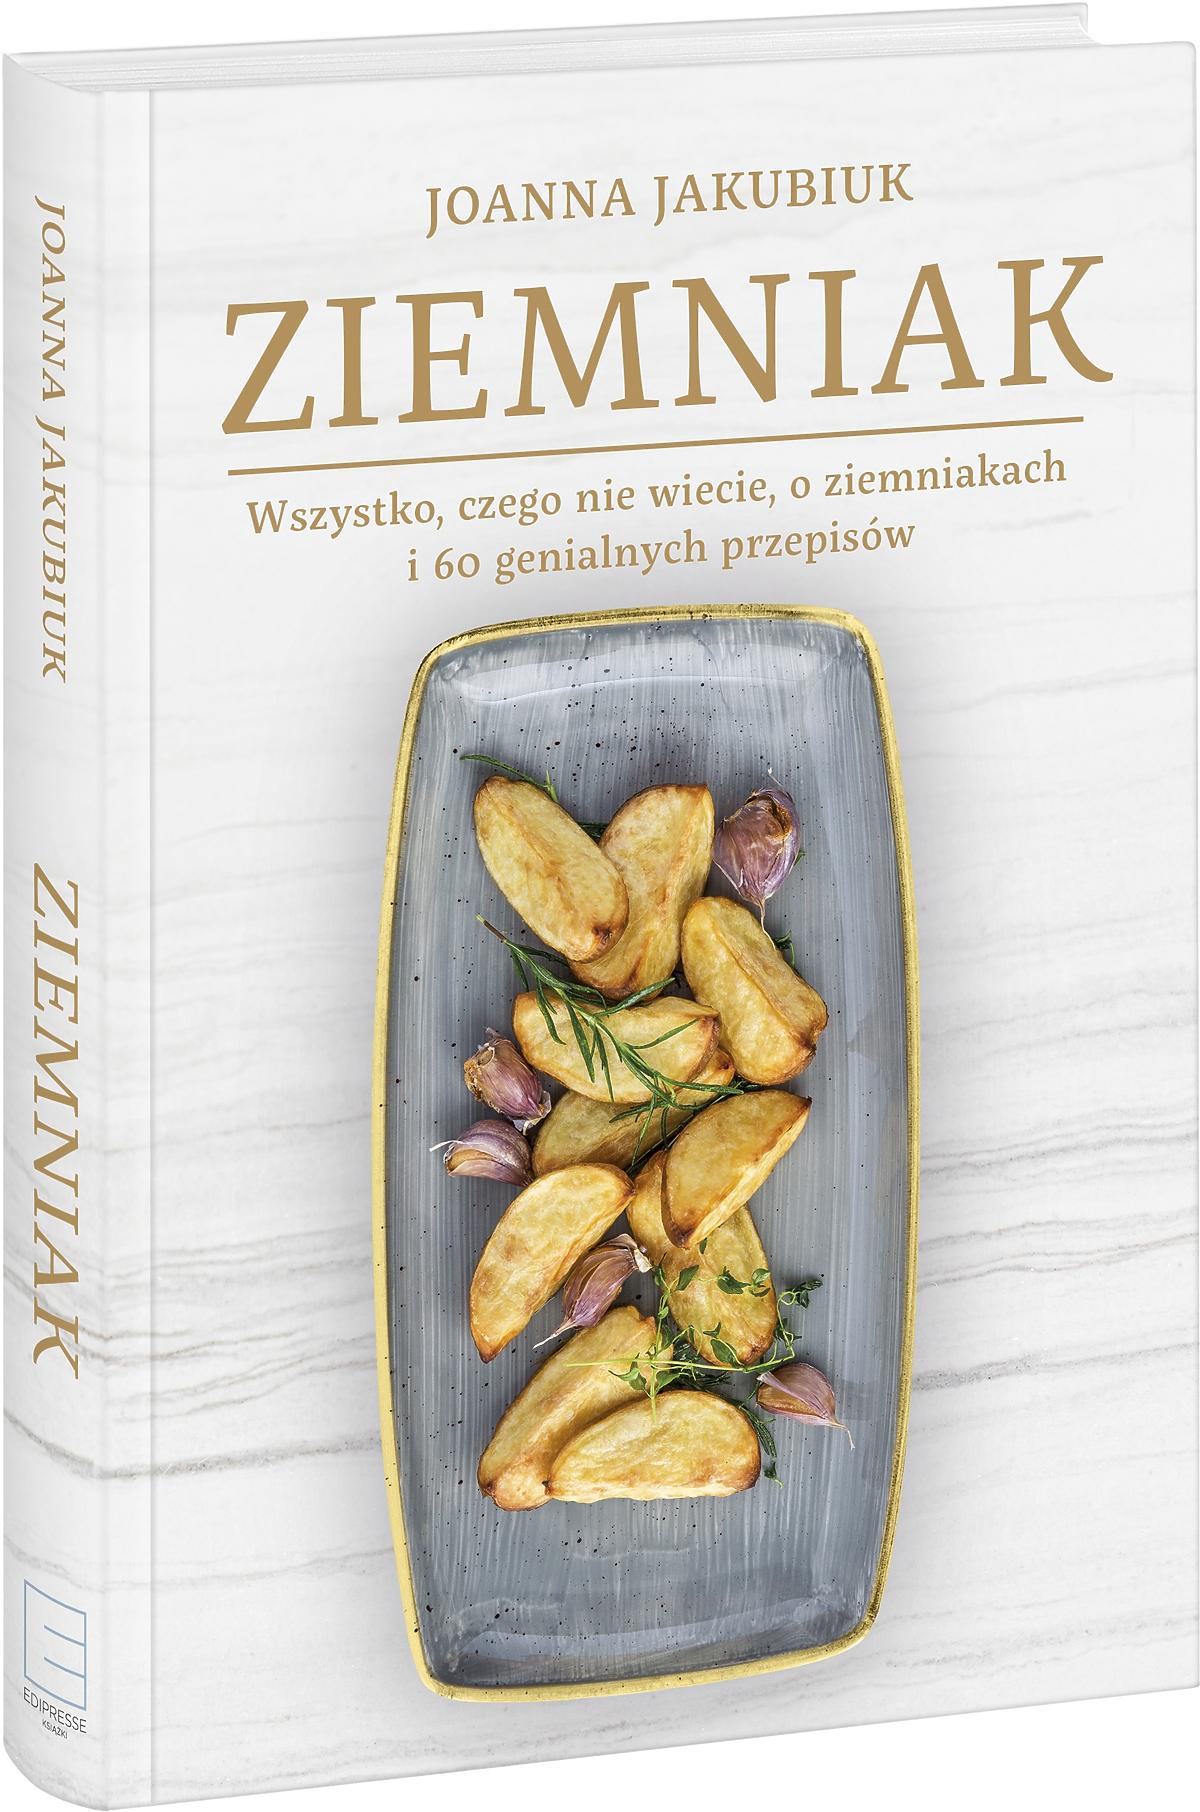 Ziemniak, Joanna Jakubiuk, wydawnictwo Edipresse